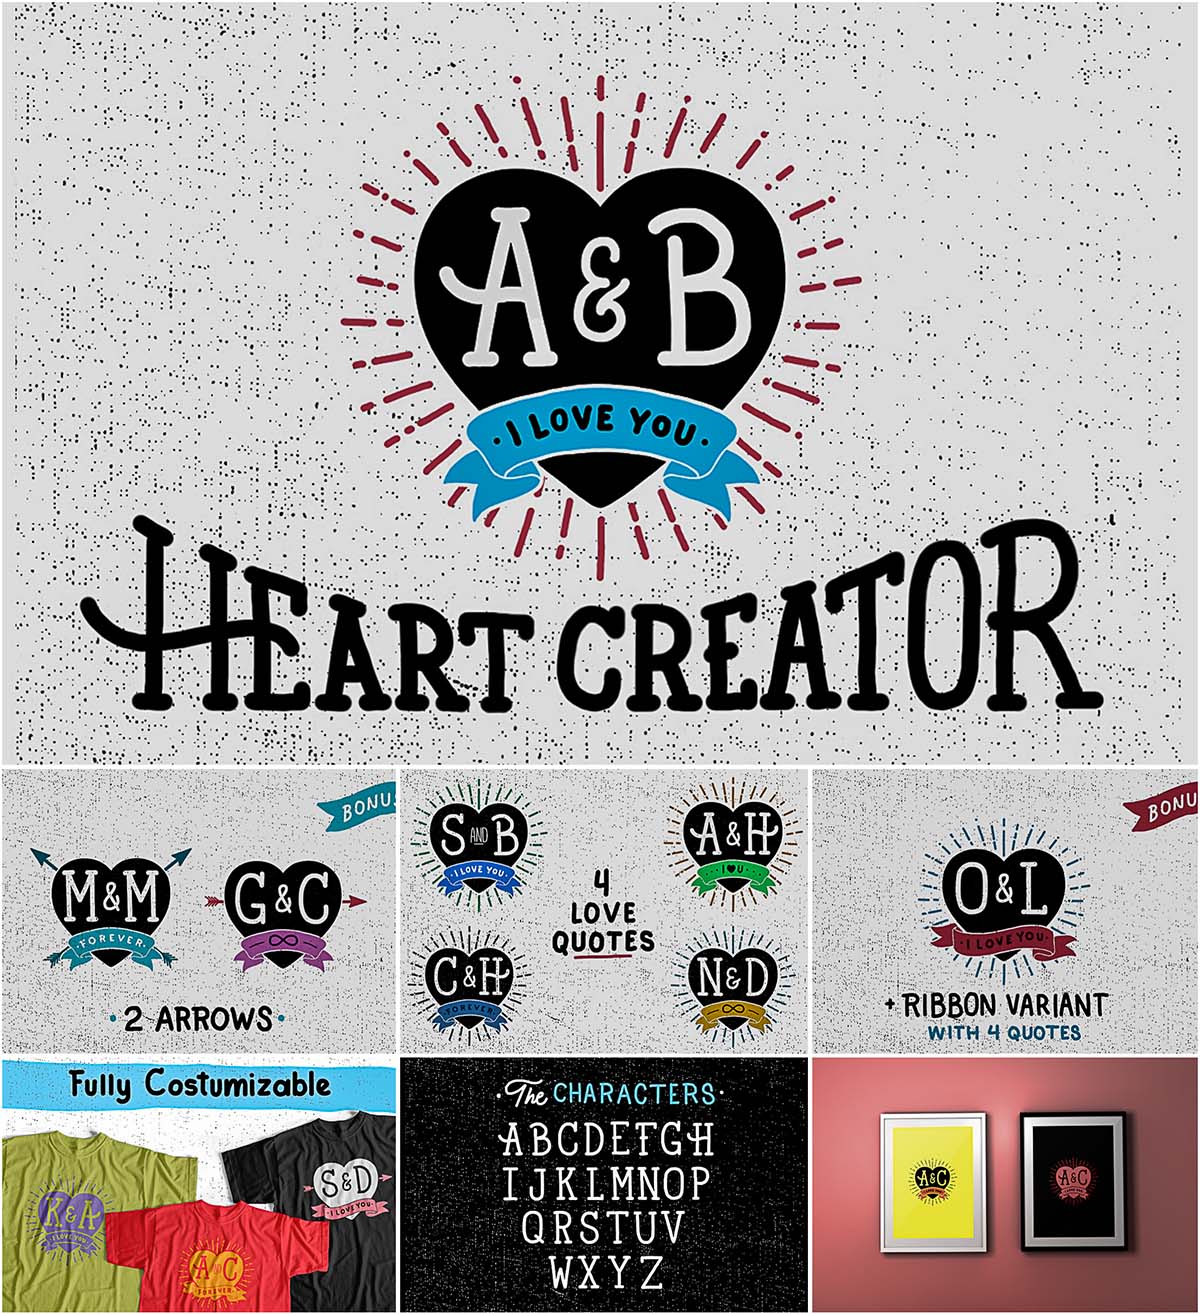 Valentines day hearts creator kit